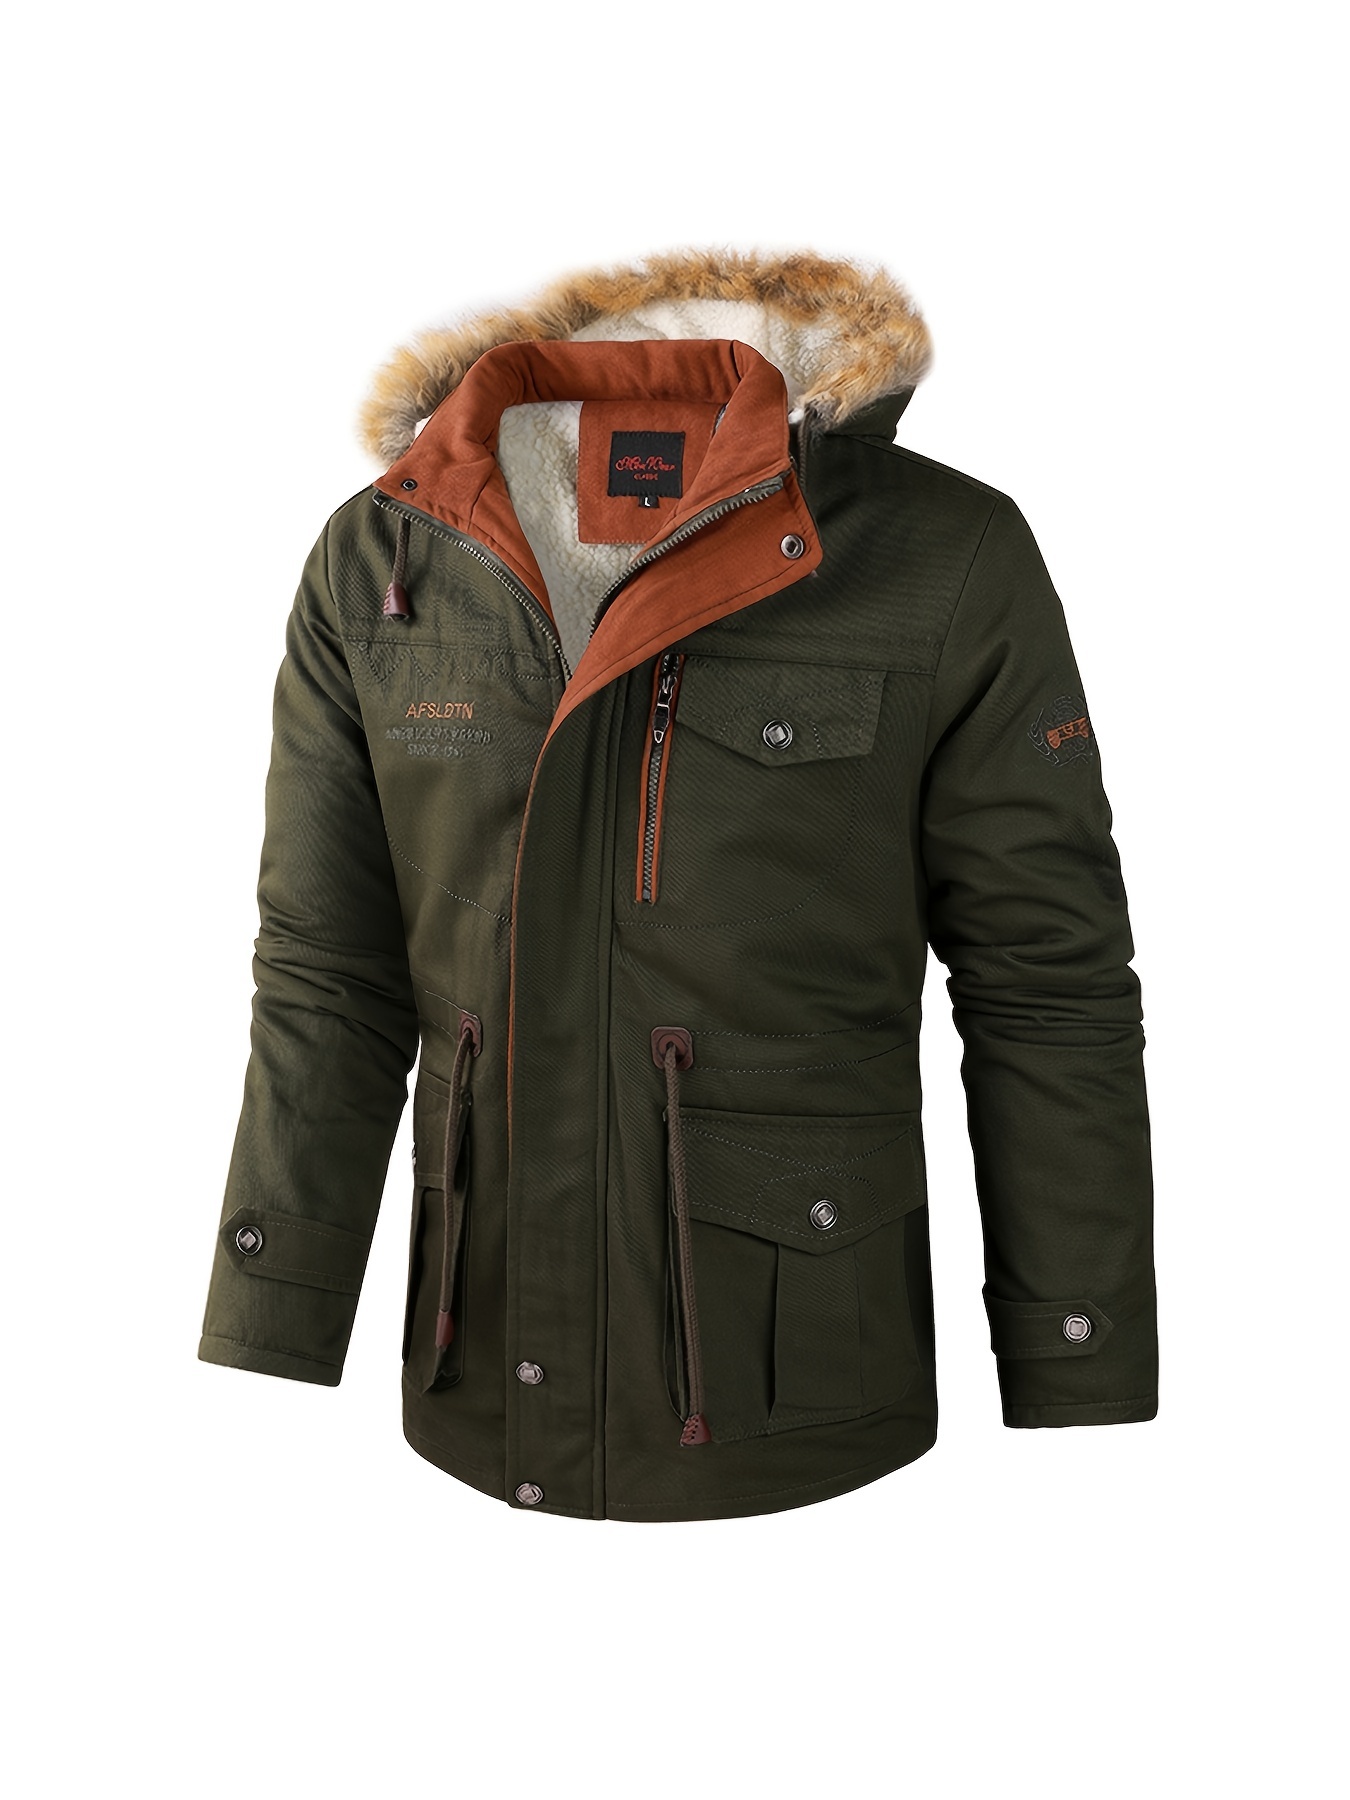 Chaqueta larga gruesa de invierno para hombre, abrigo con capucha, Parkas  informales para hombre, abrigo cálido sólido, chaquetas